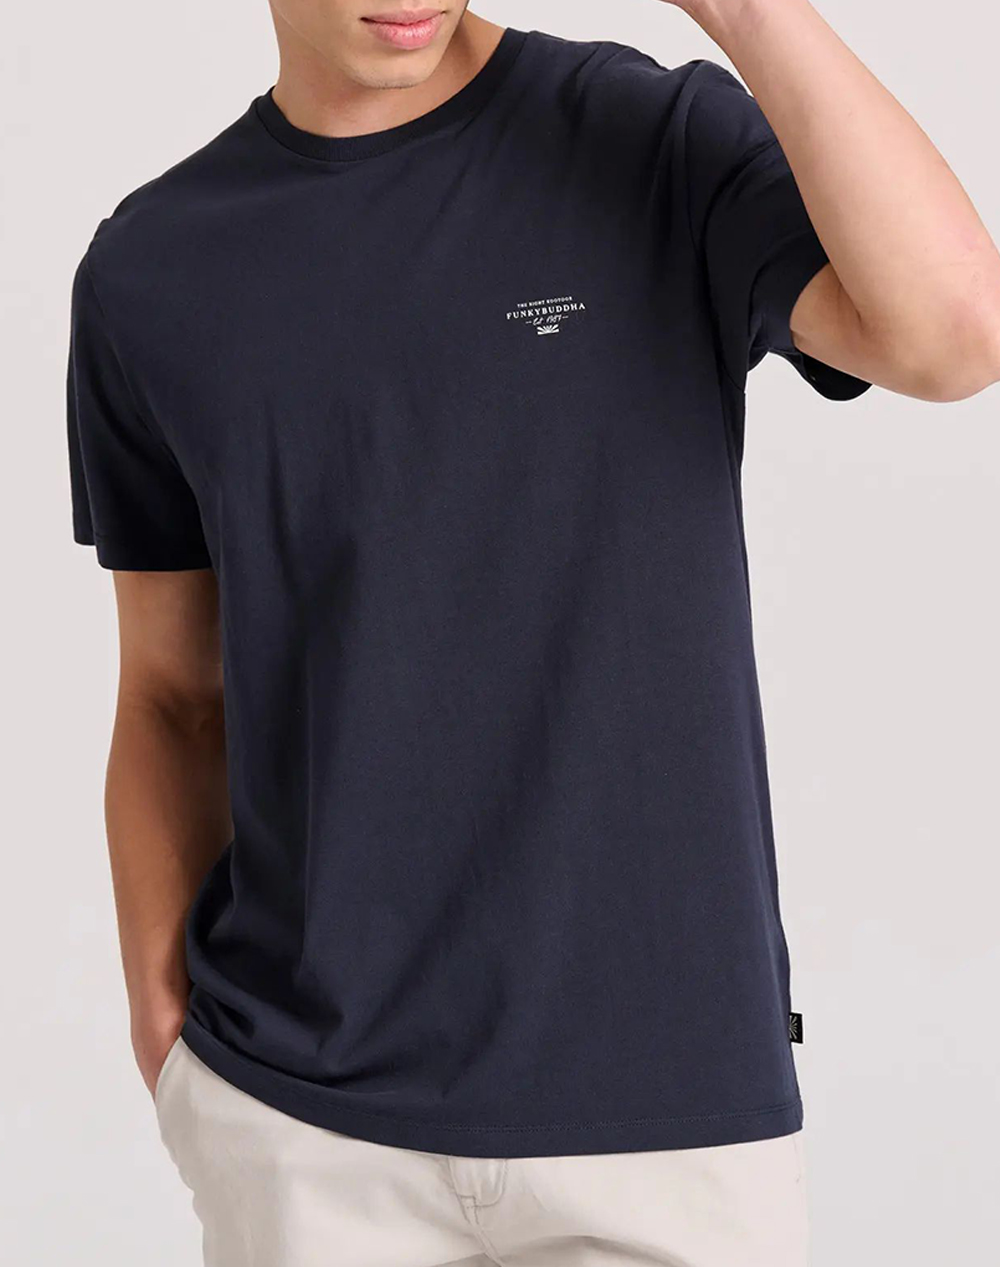 FUNKY BUDDHA T-shirt cu branded model tiparit - The essentials